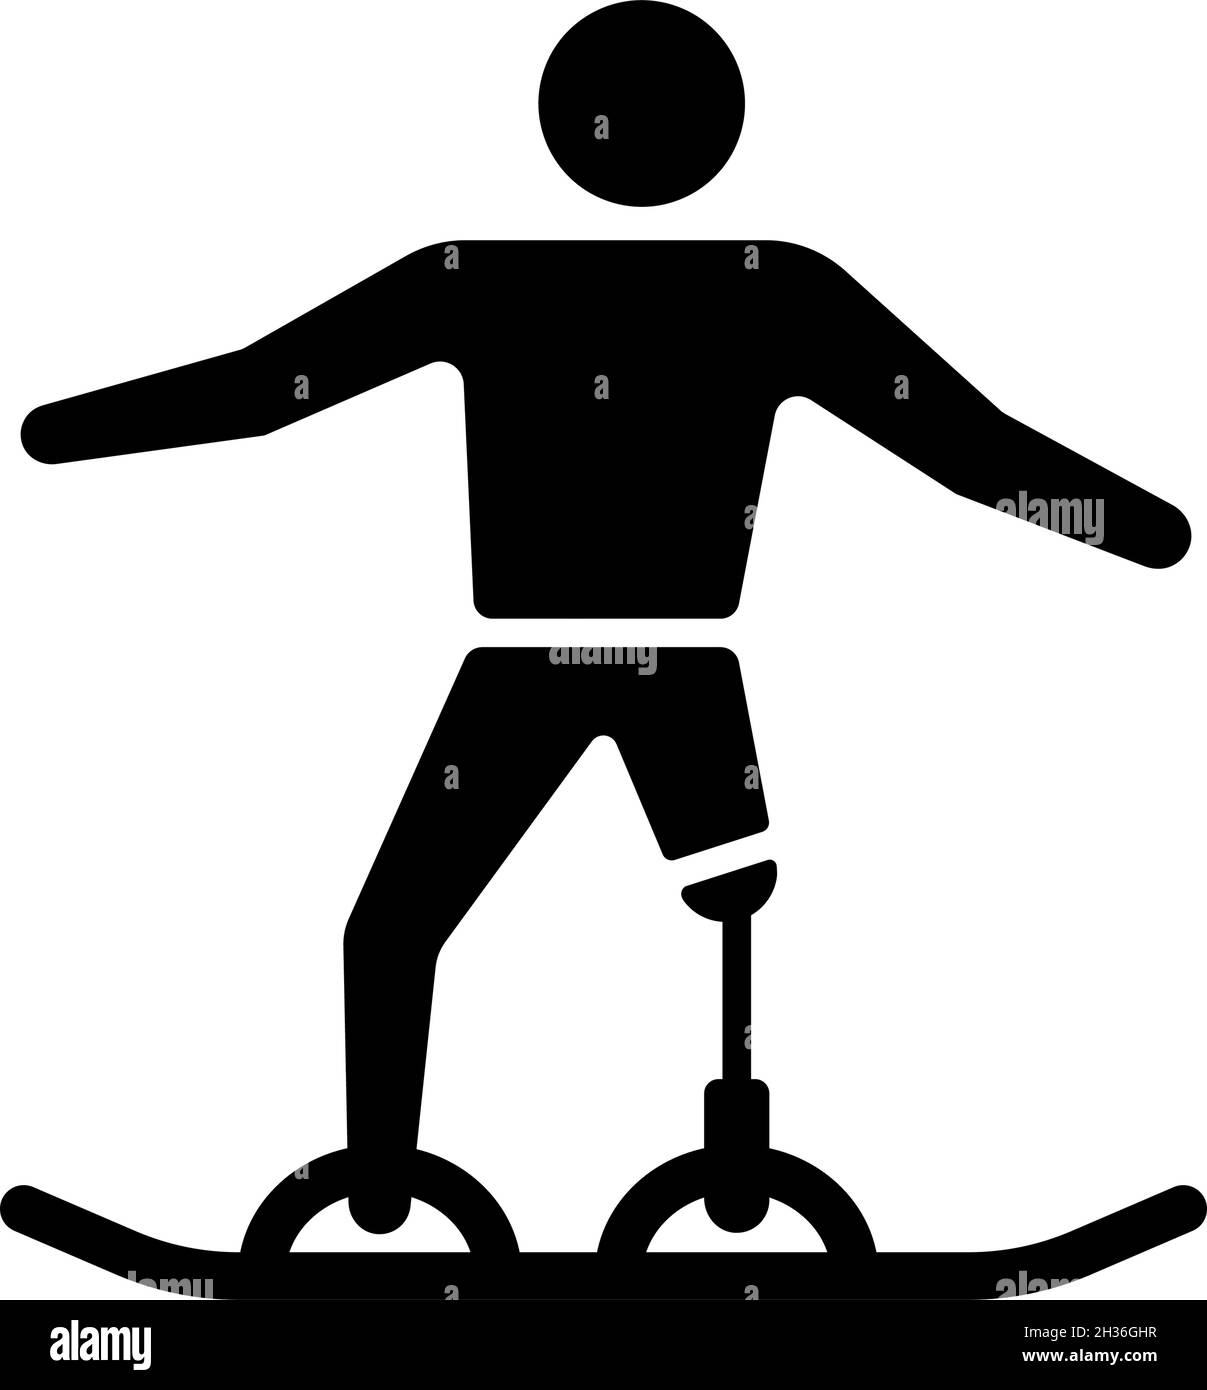 Snowboarding black glyph icon Stock Vector